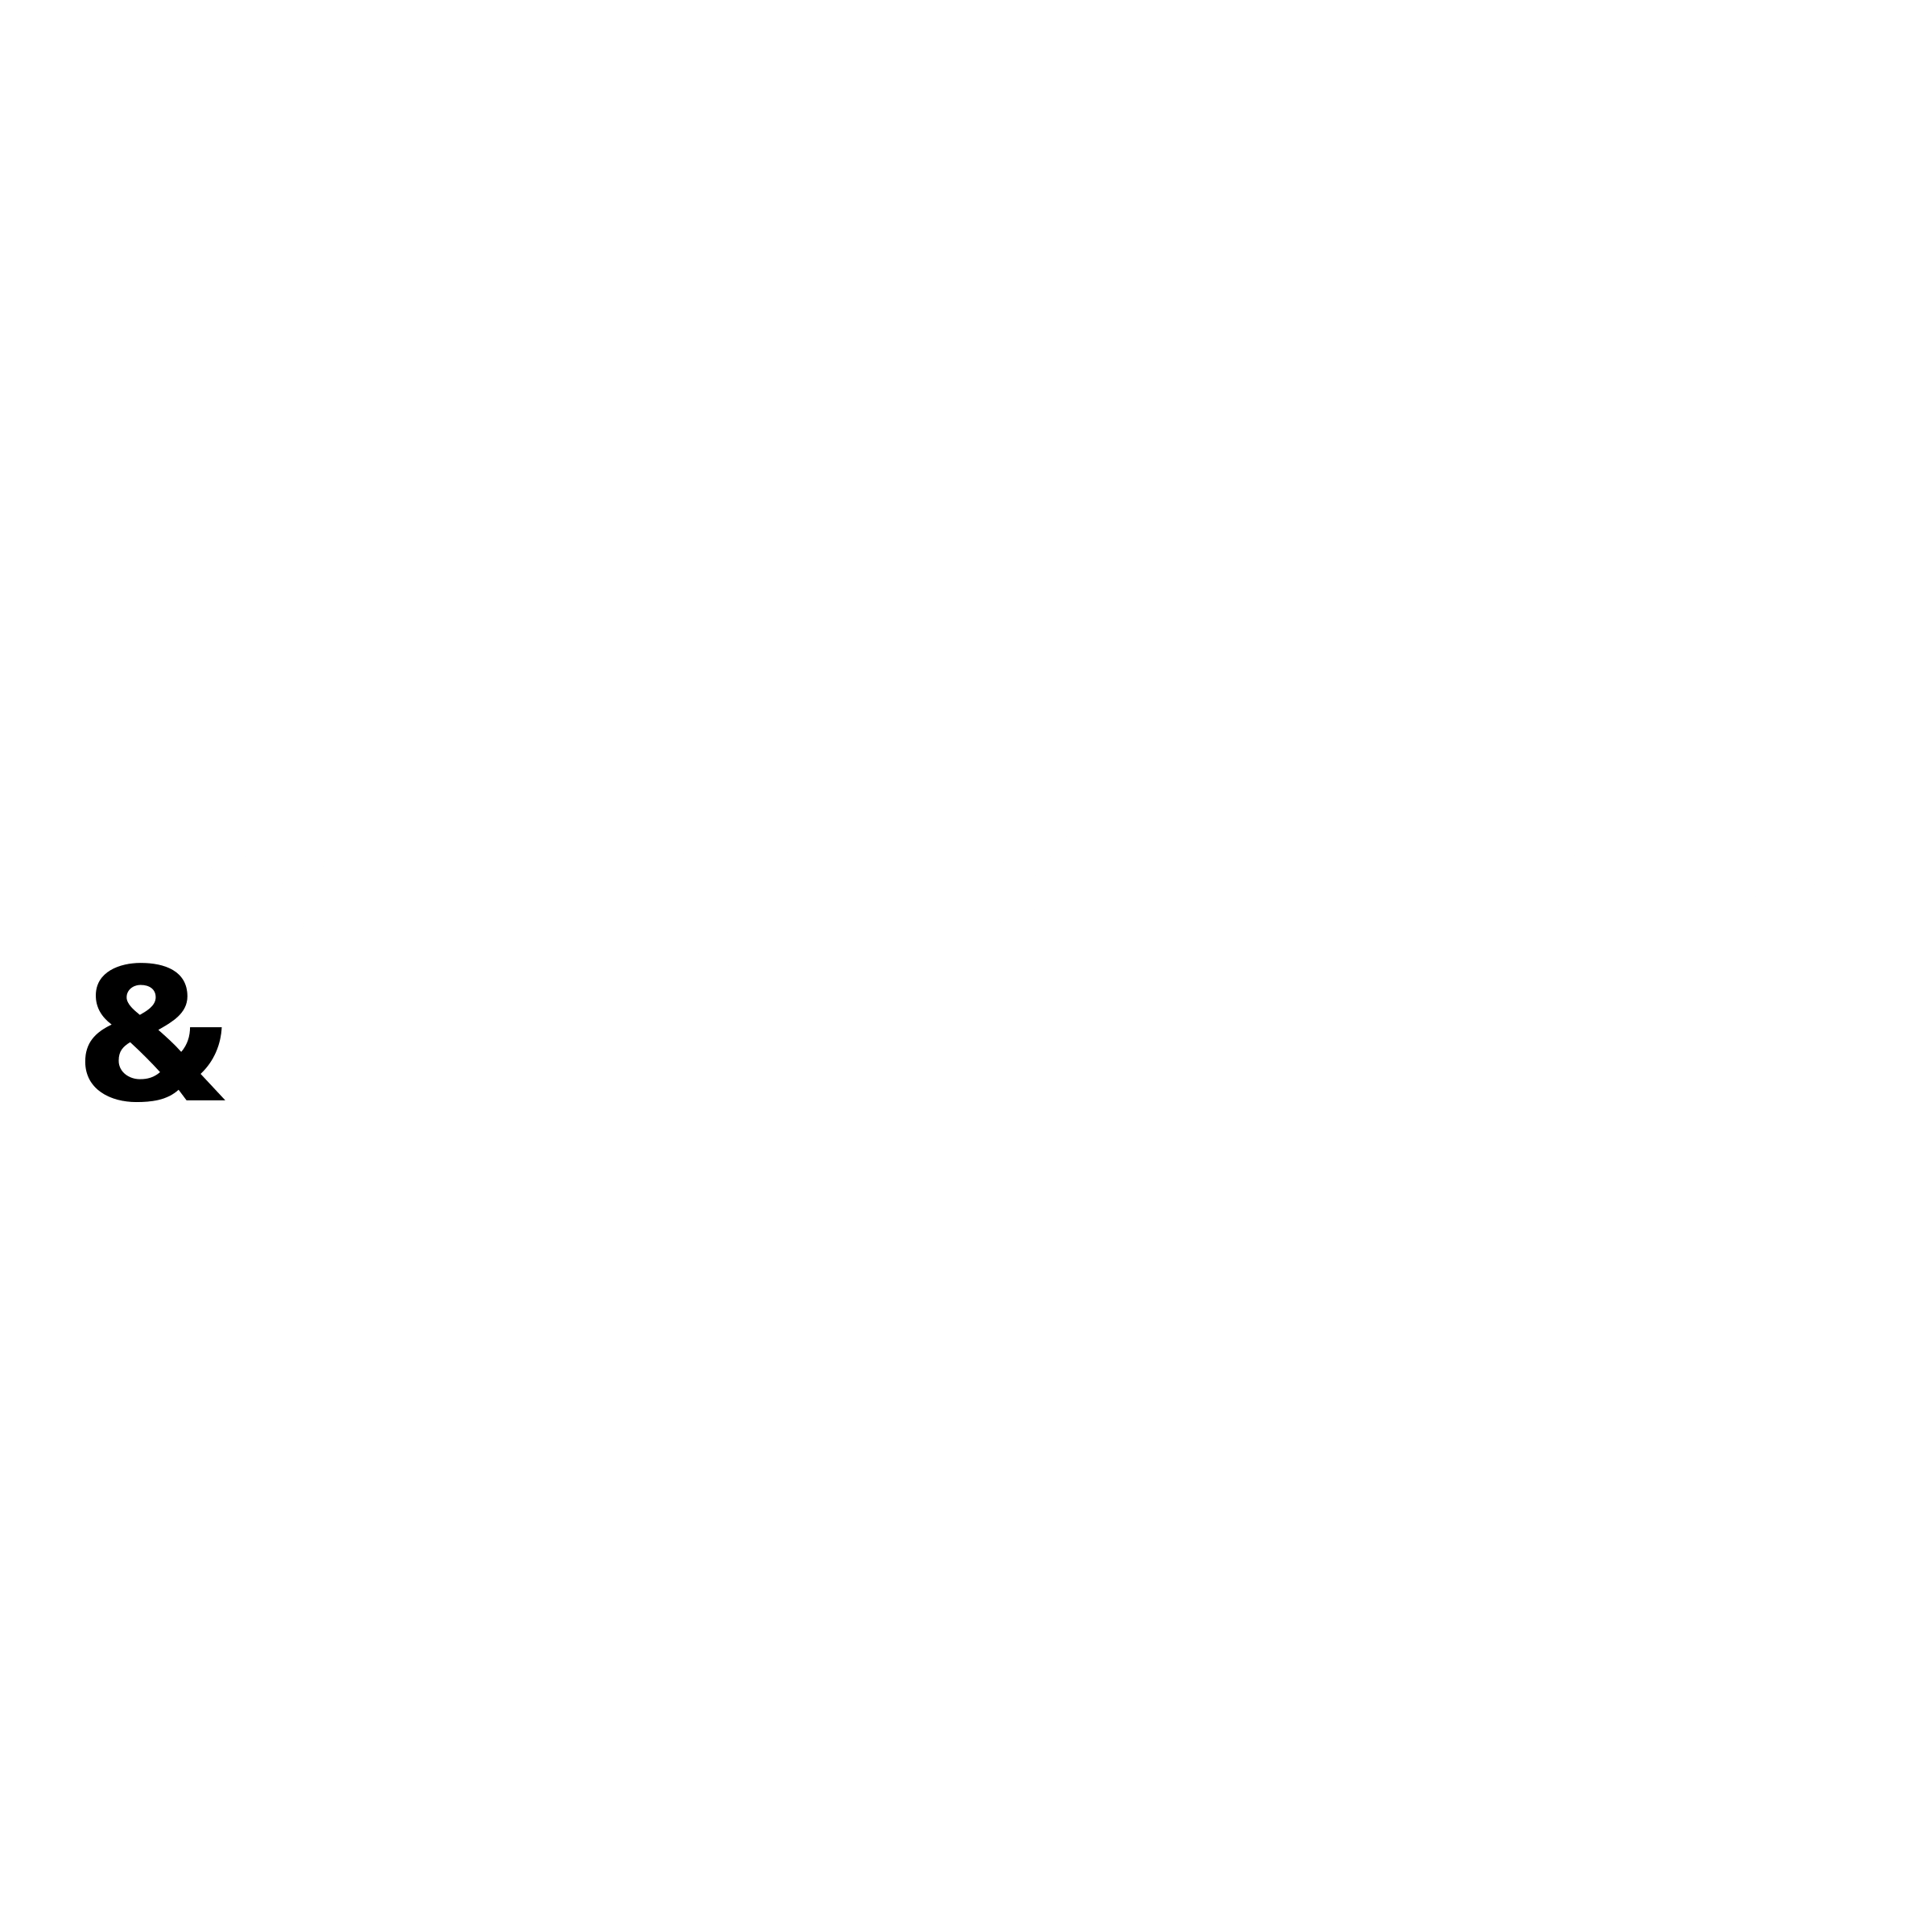 Vickers Logo - Vickers & Benson Logo PNG Transparent & SVG Vector - Freebie Supply